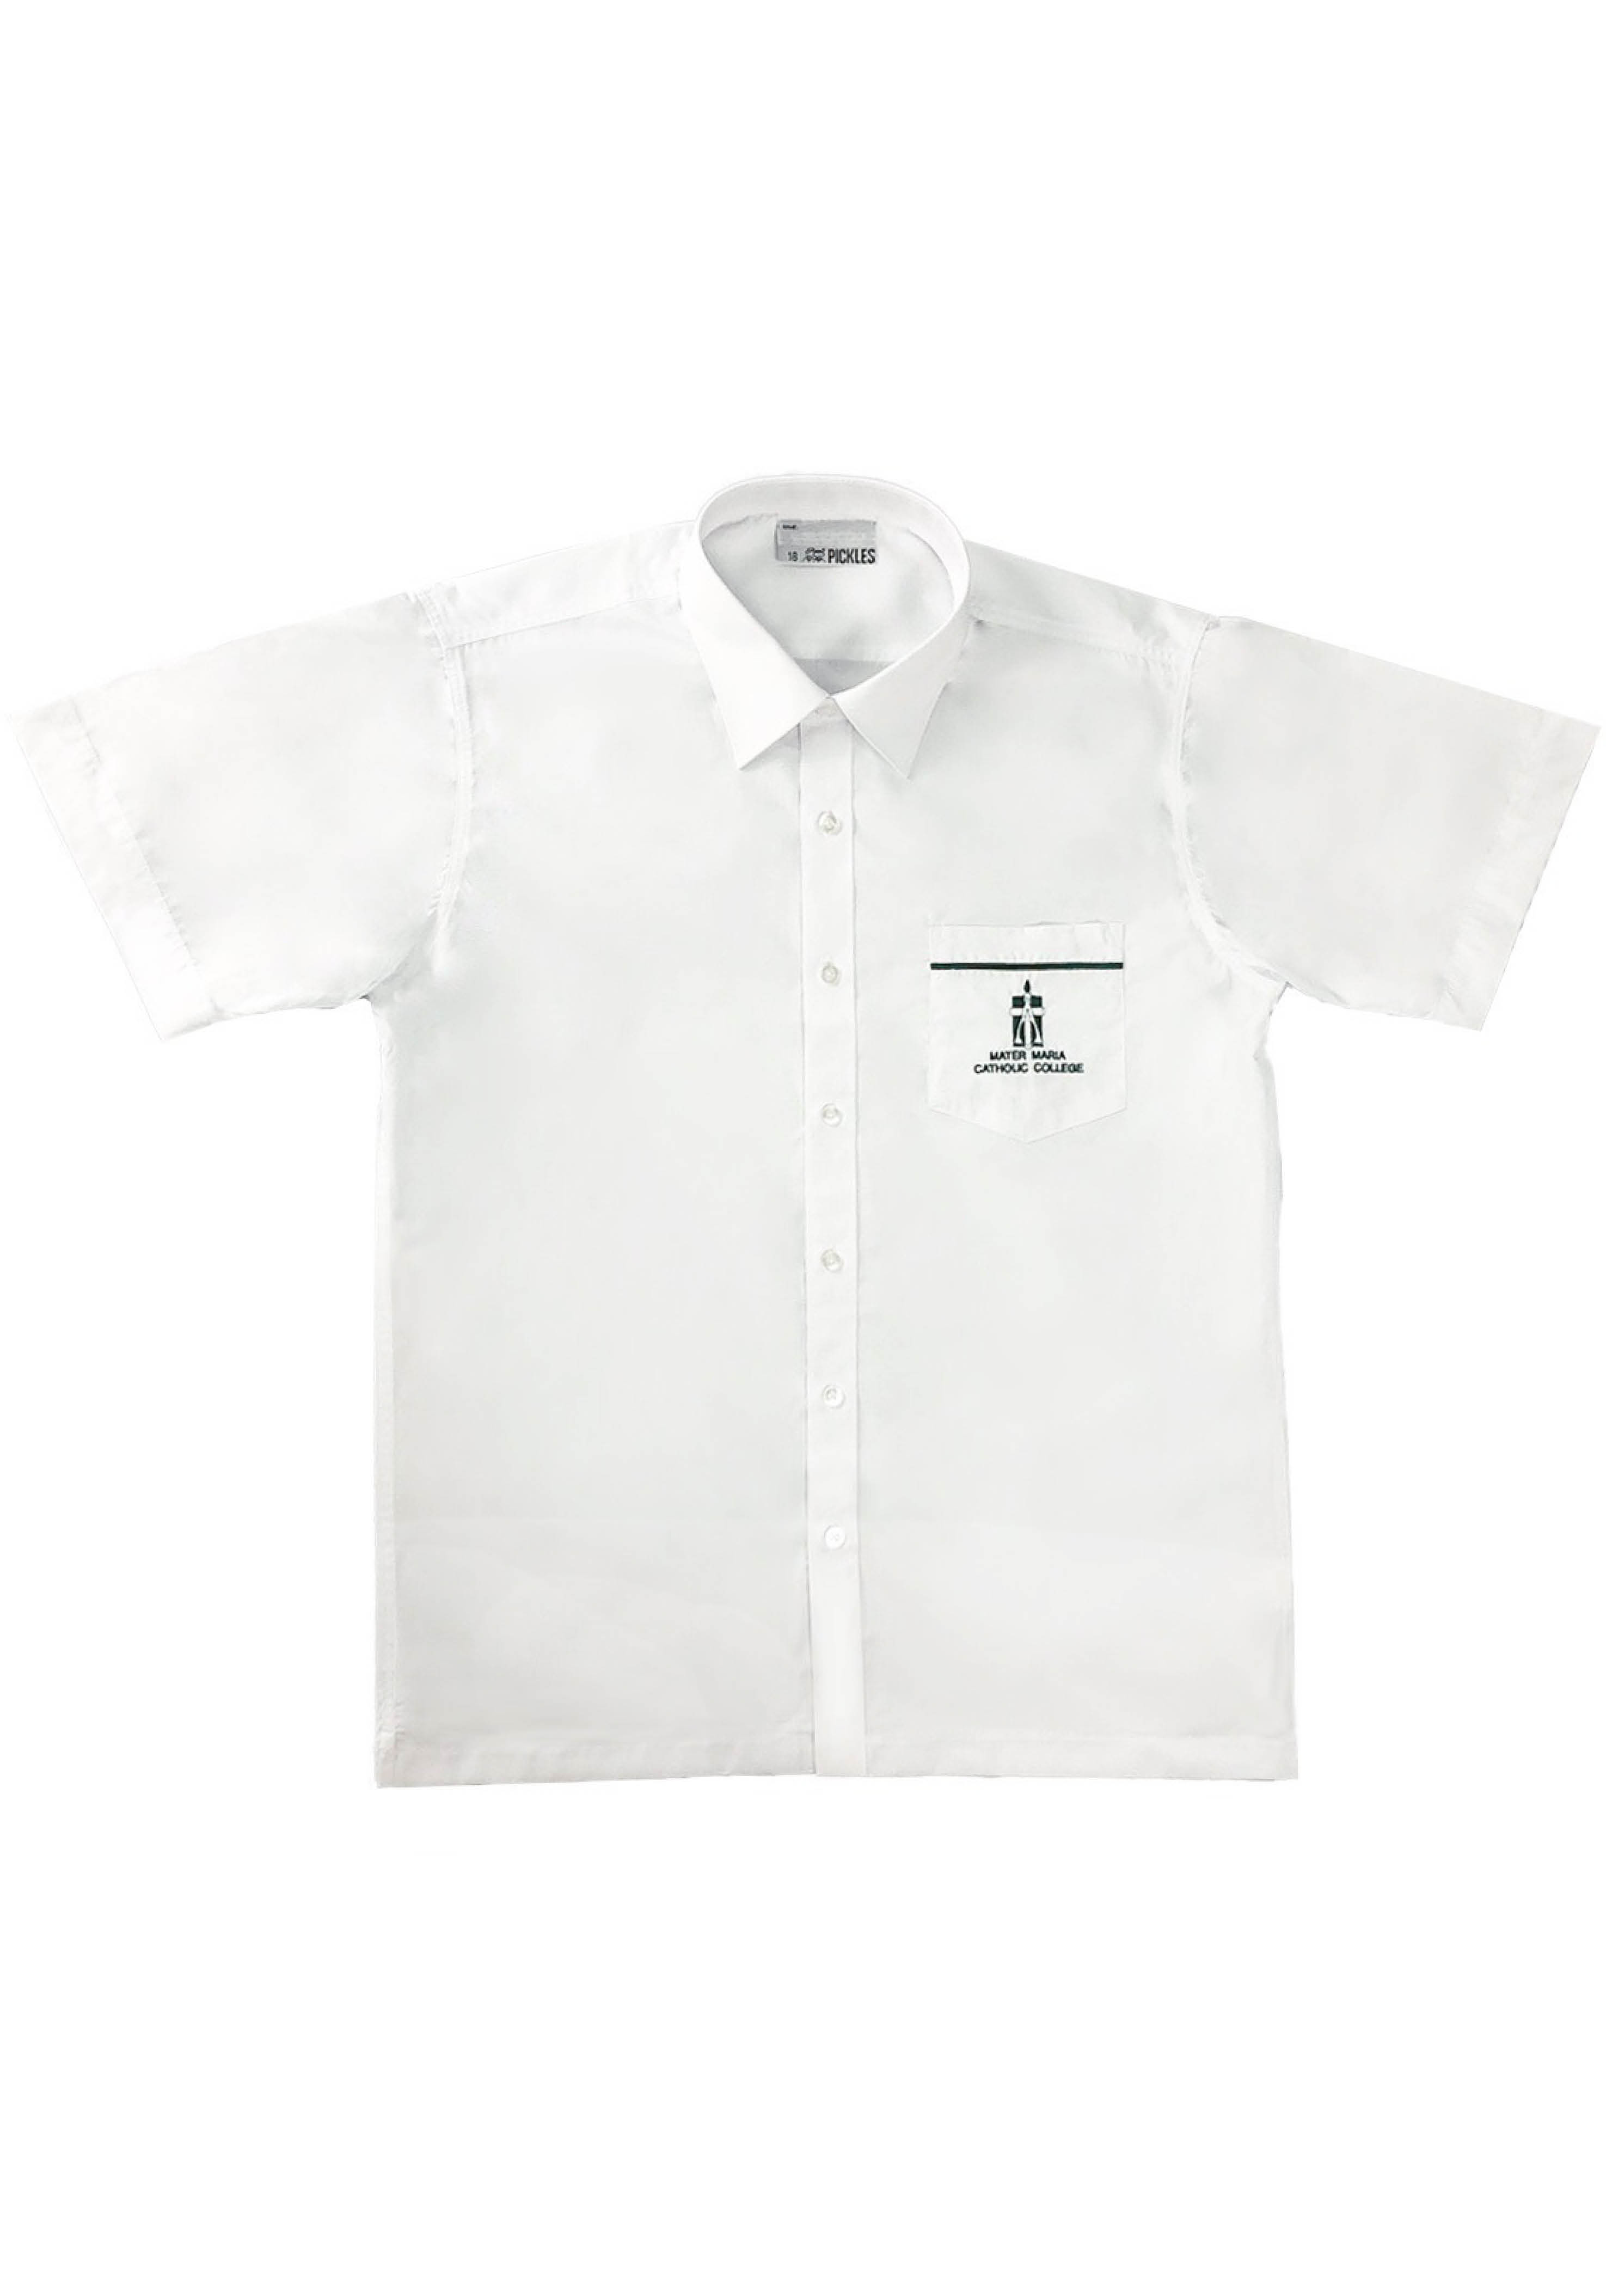 Mater Maria Boys Short Sleeve Shirt | Shop at Pickles Schoolwear ...